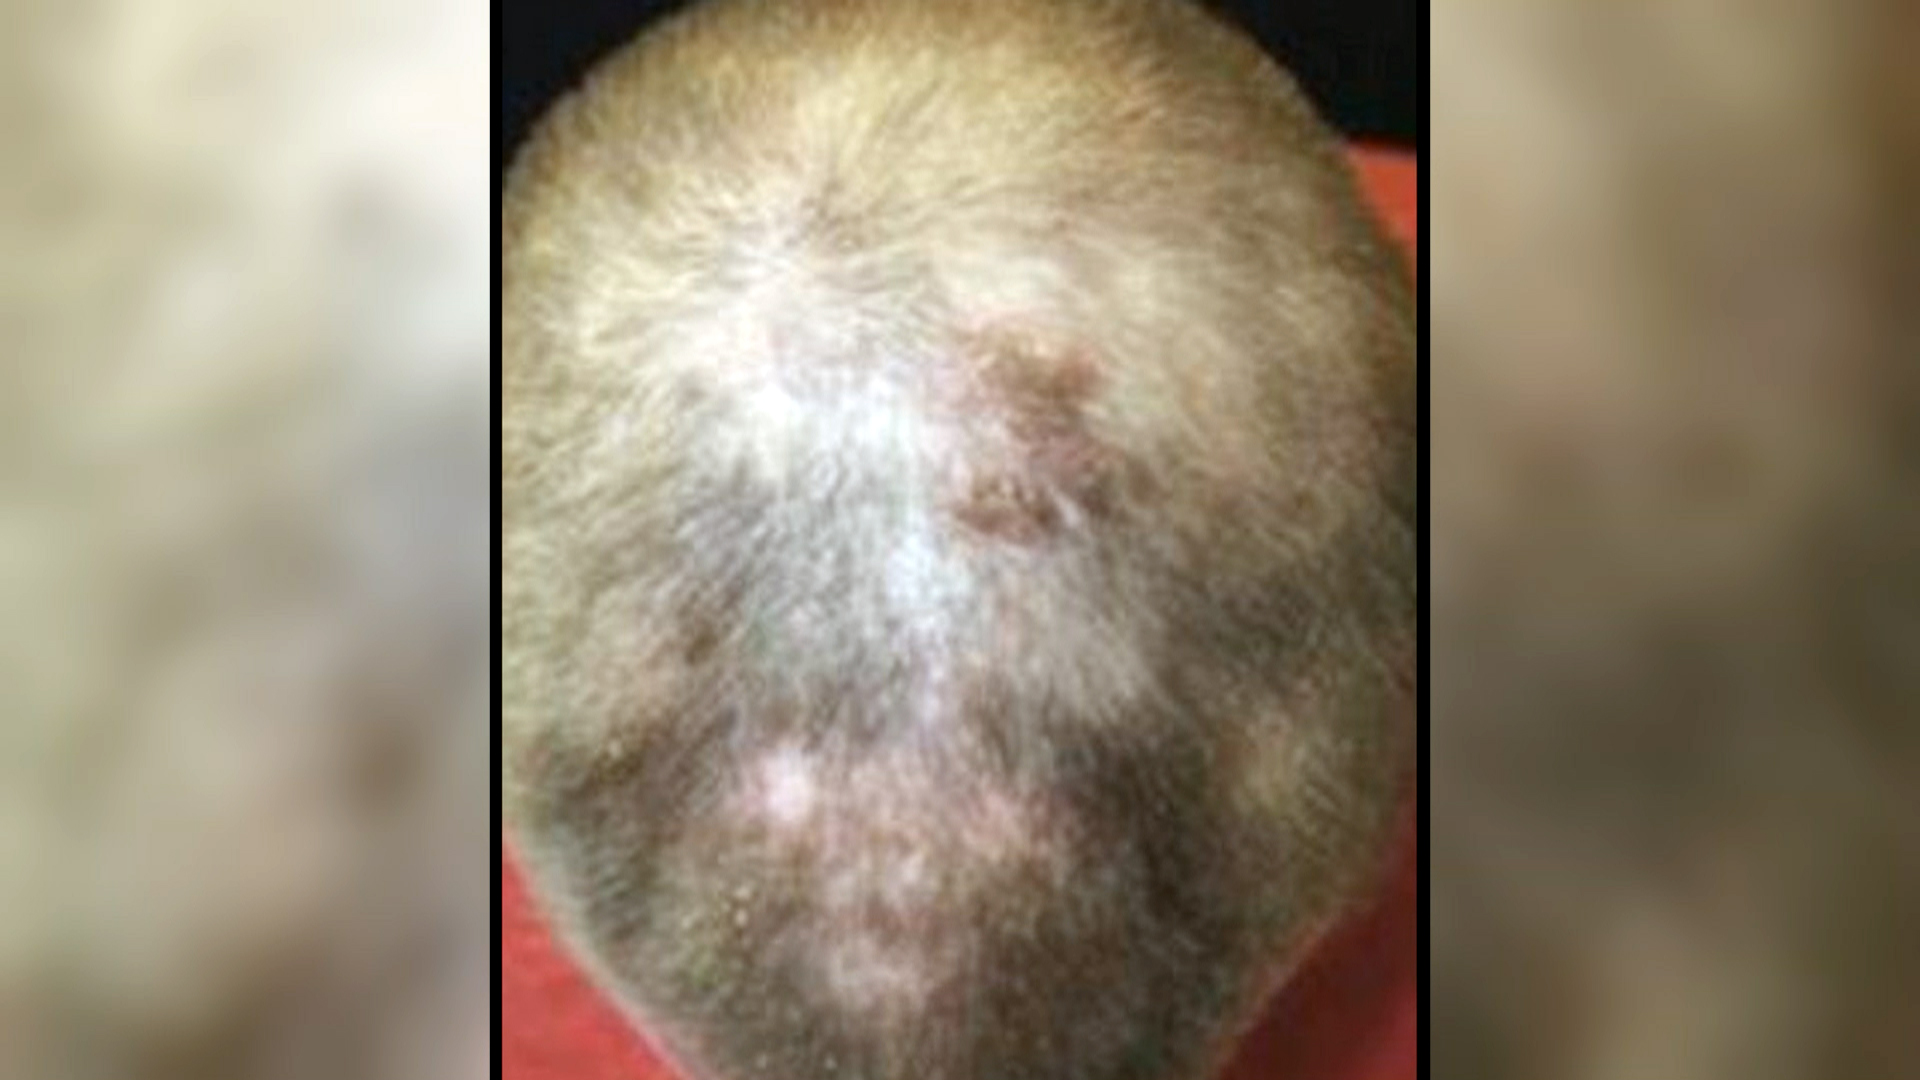 Bald Man Grows Full Head of Hair